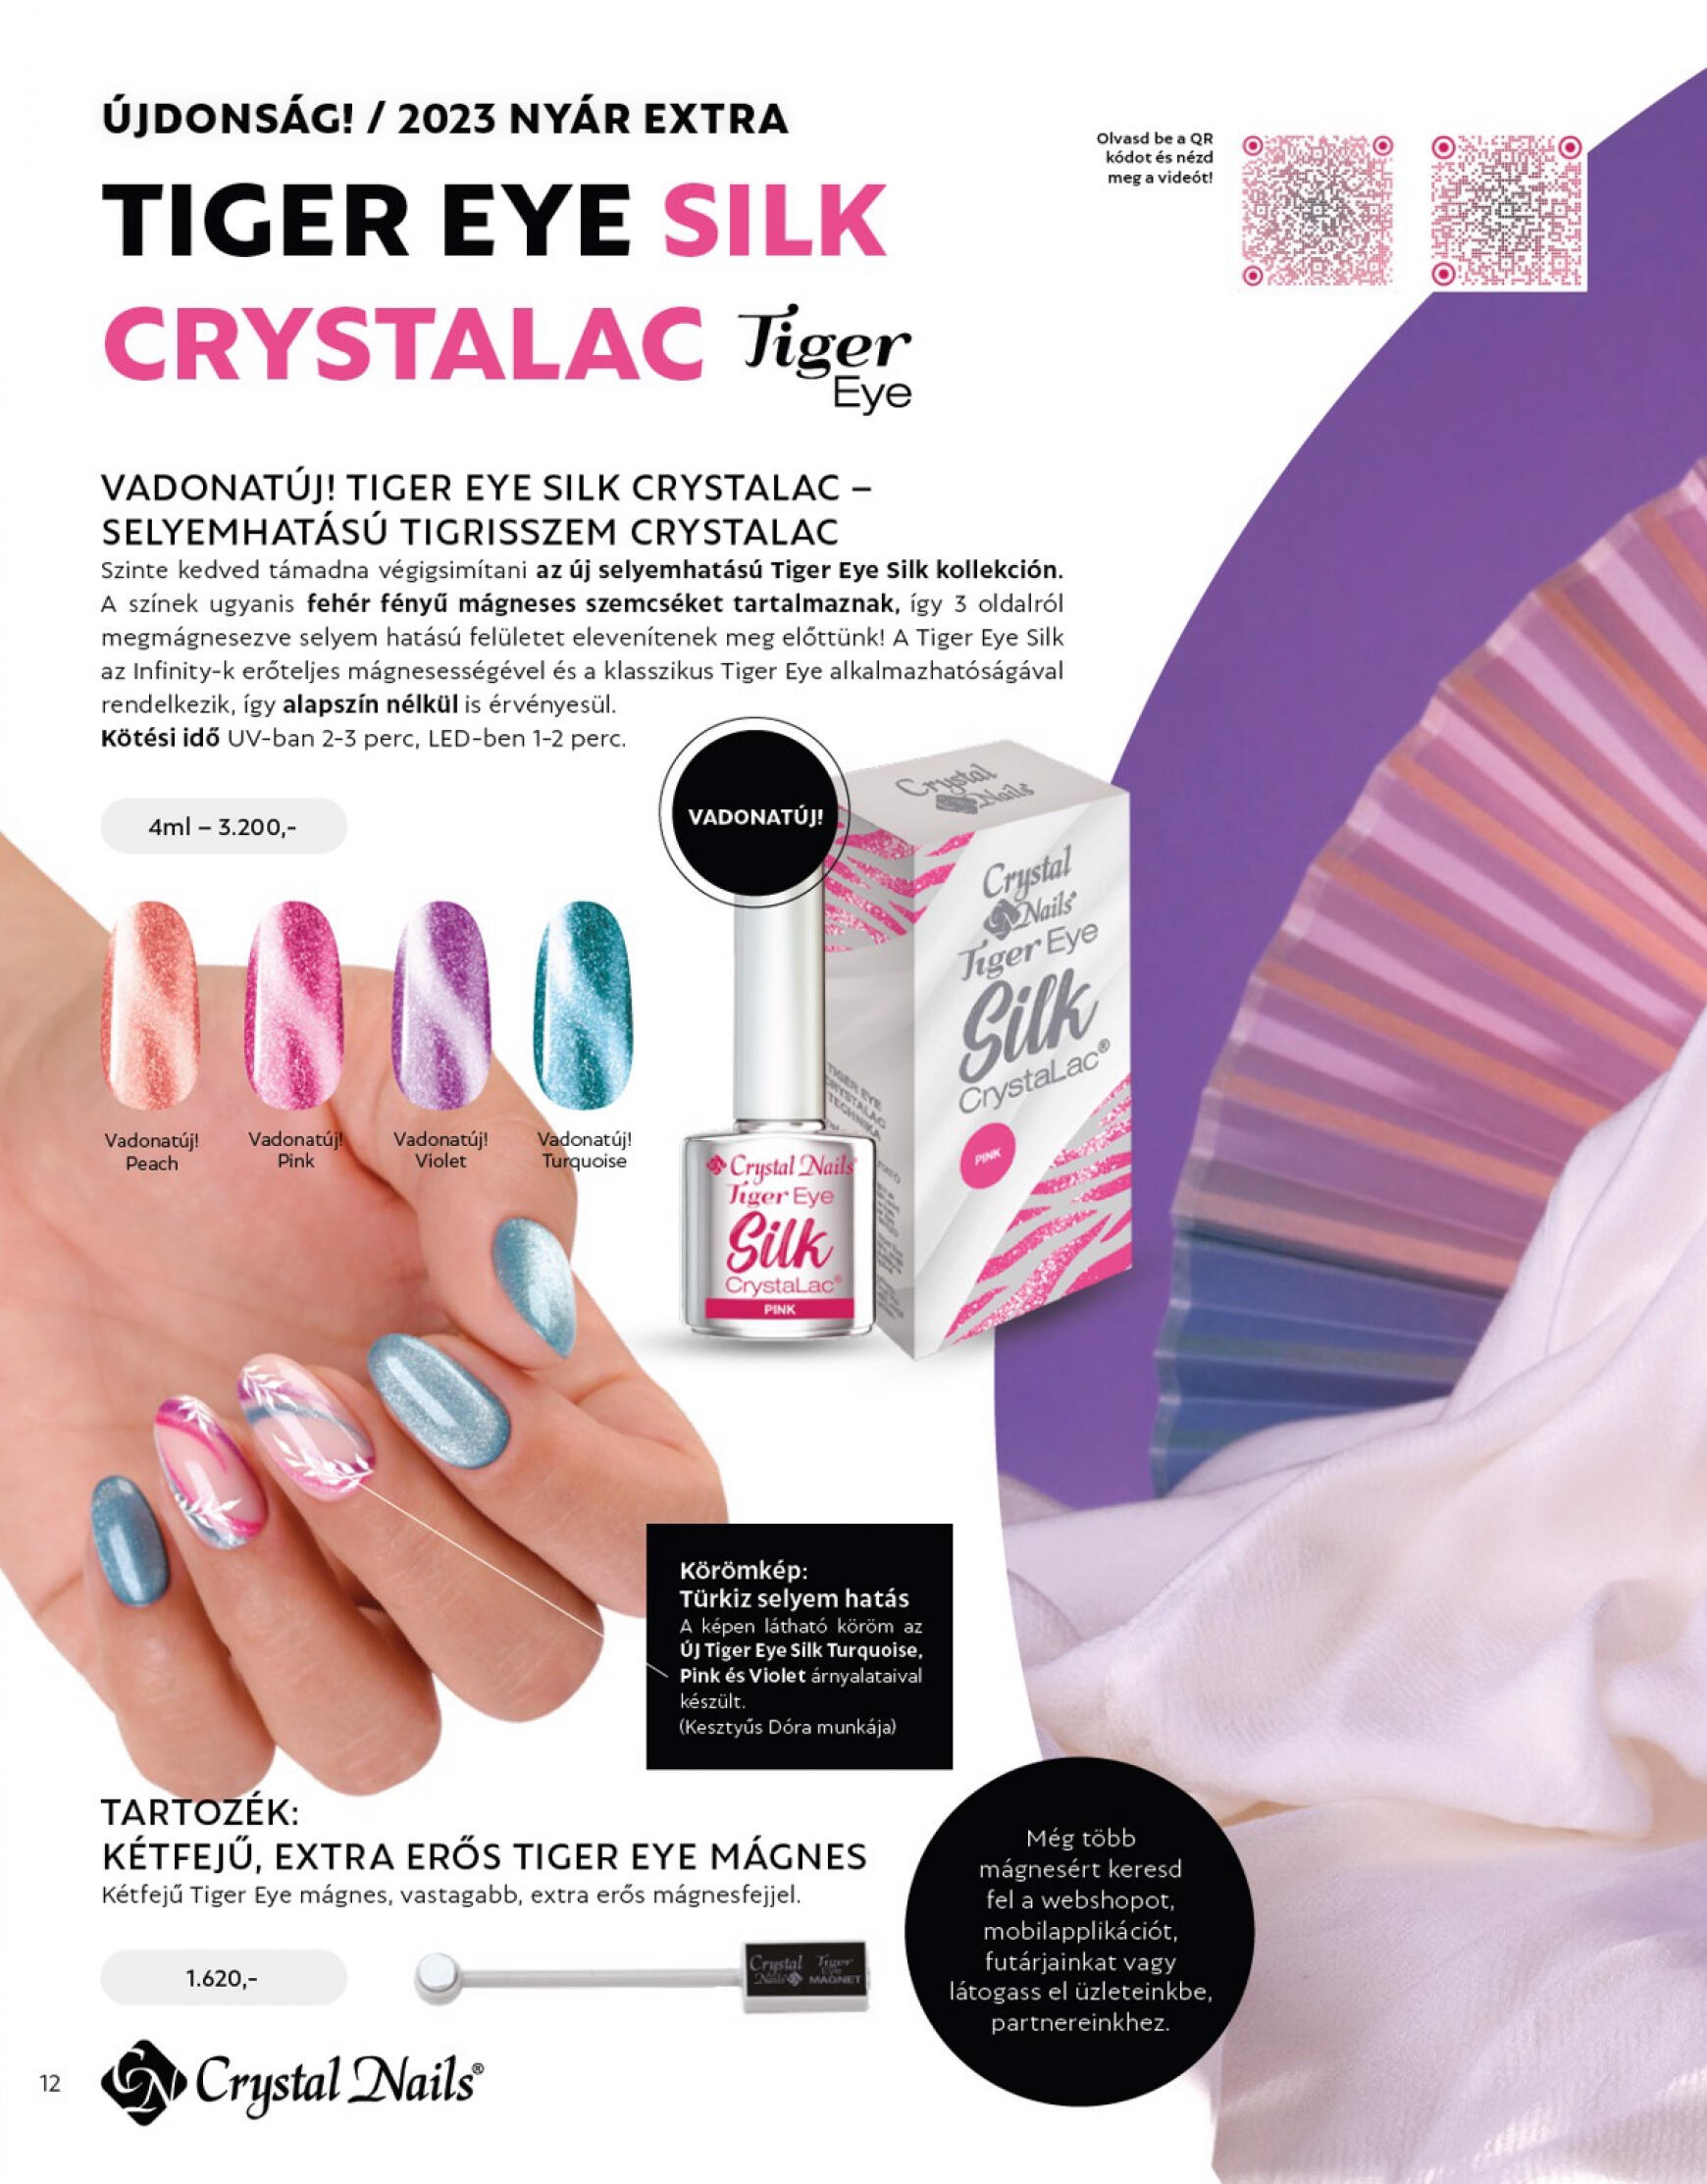 crystal-nails - Crystal Nails 2023 NYÁR EXTRA katalógus - page: 12